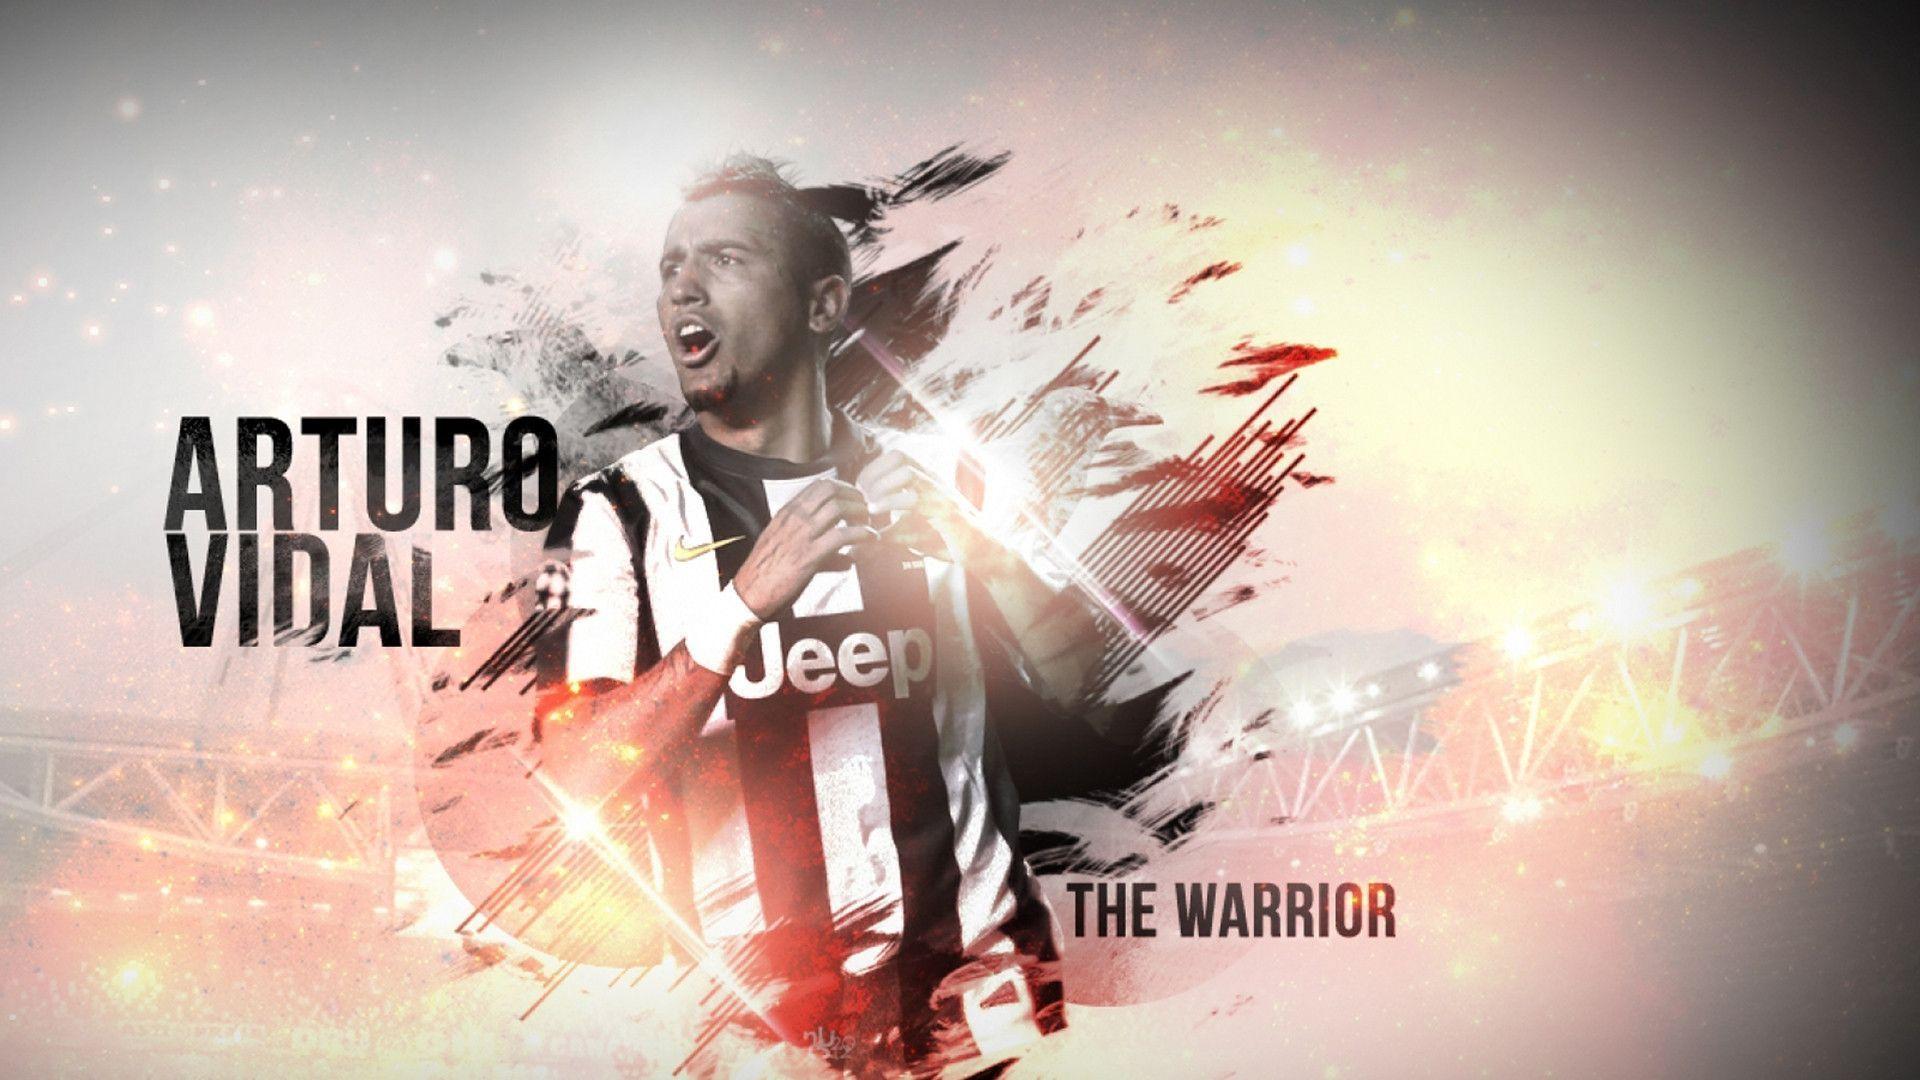 Arturo Vidal 2014 Juventus Wallpaper Wide or HD